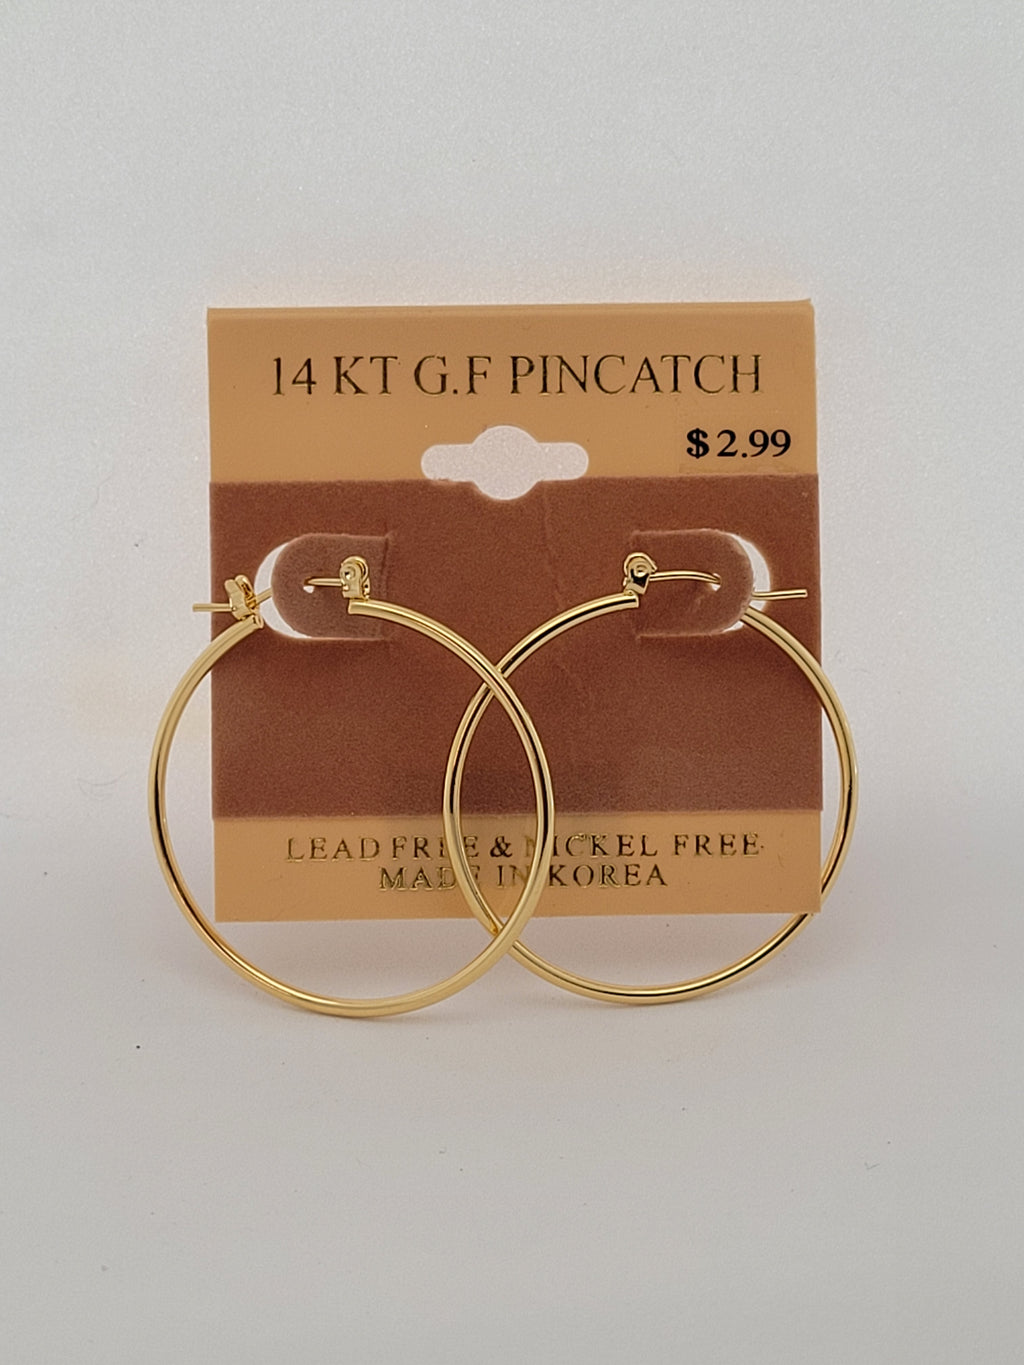 14 KT G.F Pincatch Gold Earring 350232